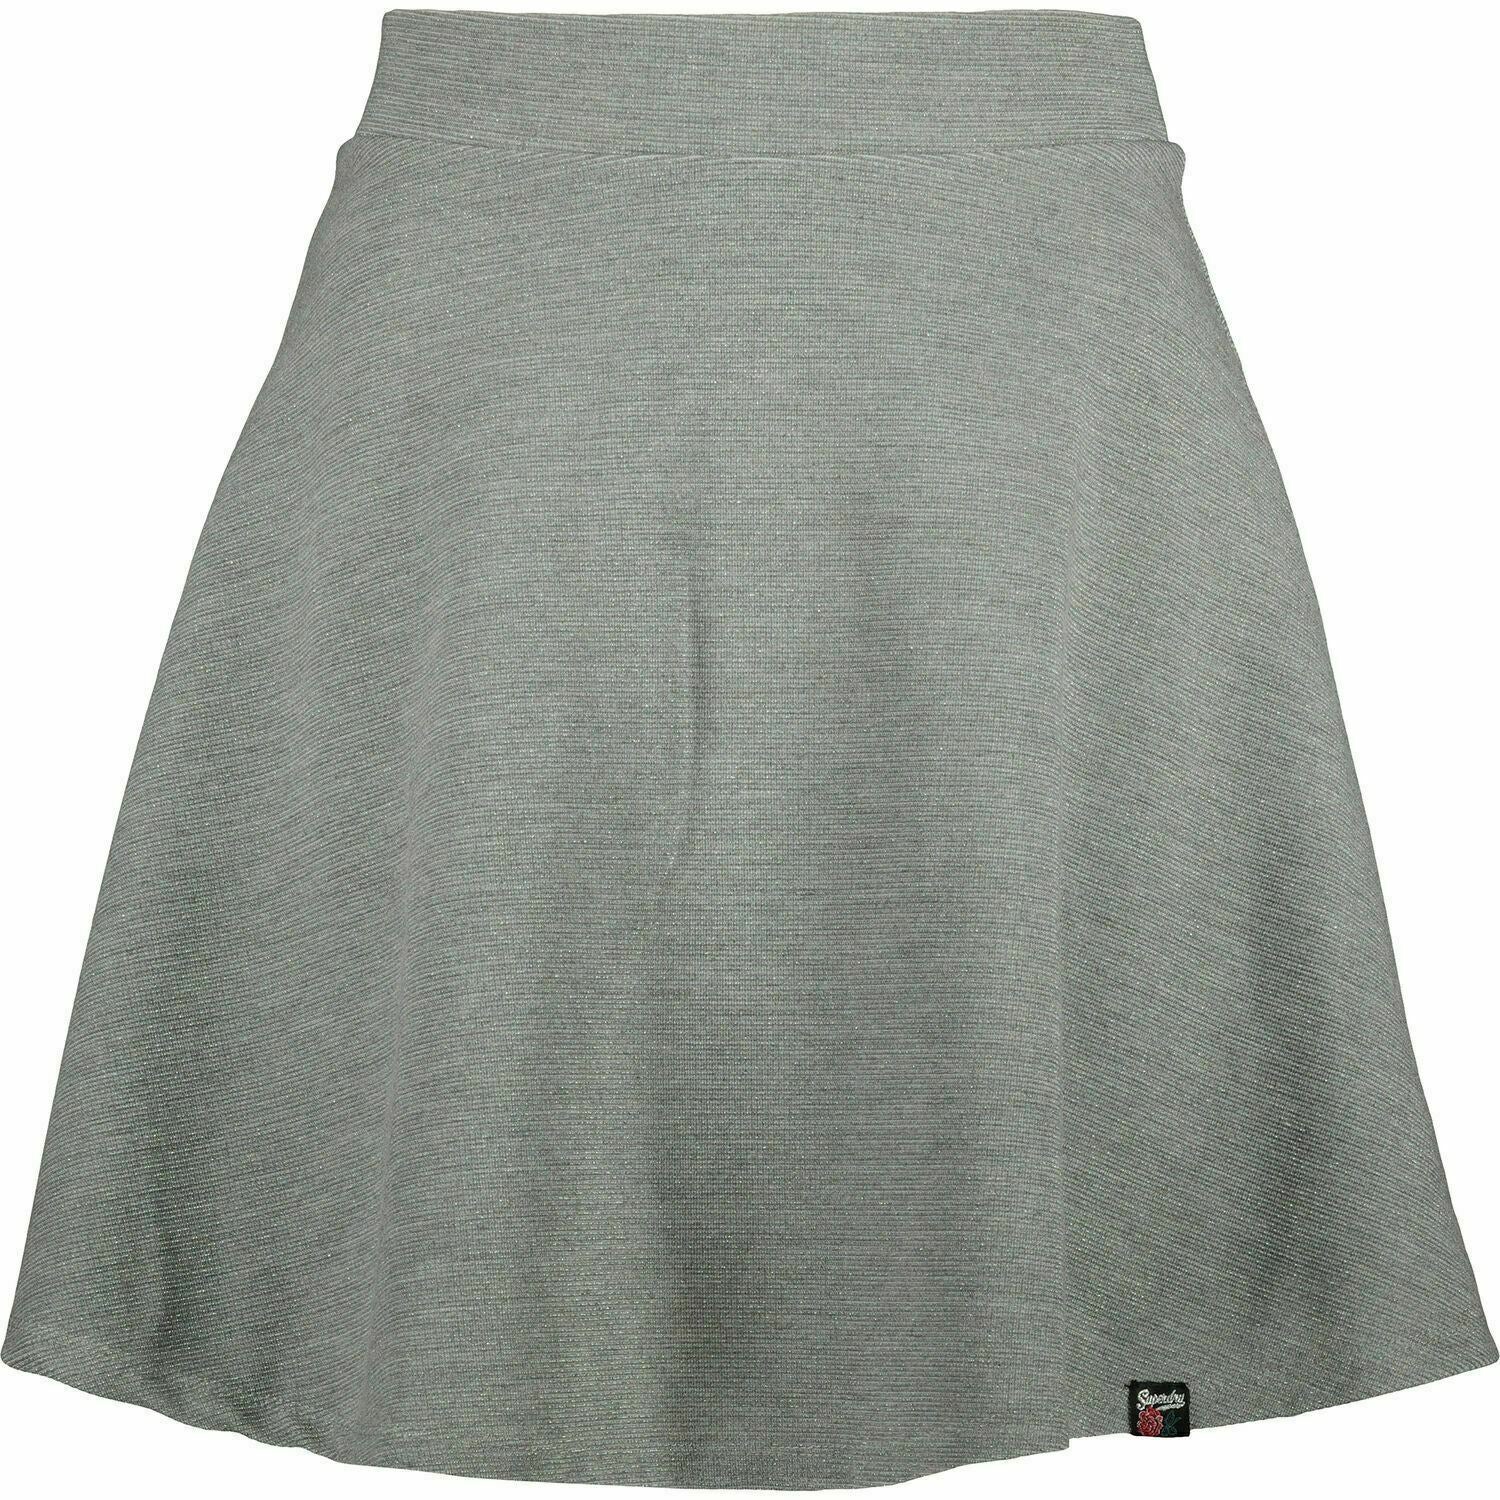 SUPERDRY Women's TAYLA Iron Grey Sparkle Skater Skirt, size S / UK 10